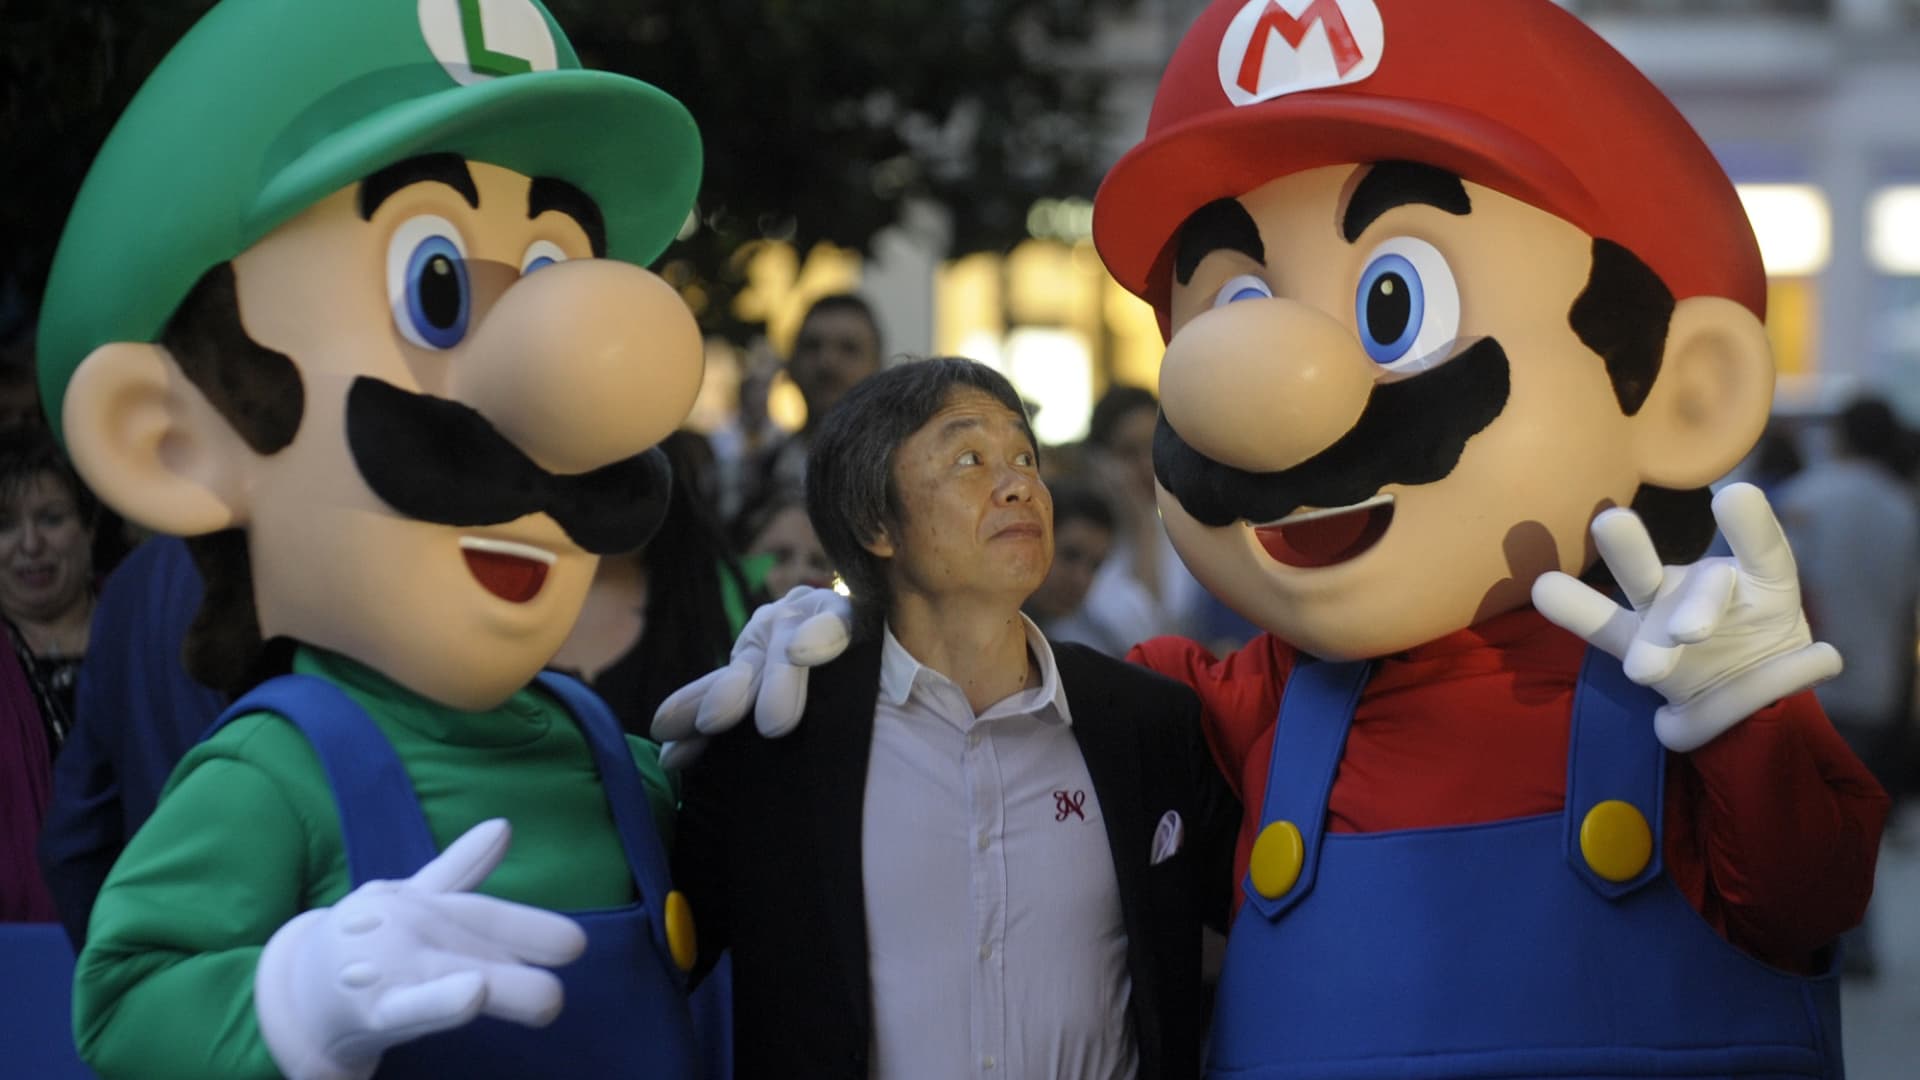 Pushing Buttons: Nintendo's Shigeru Miyamoto – what we owe the